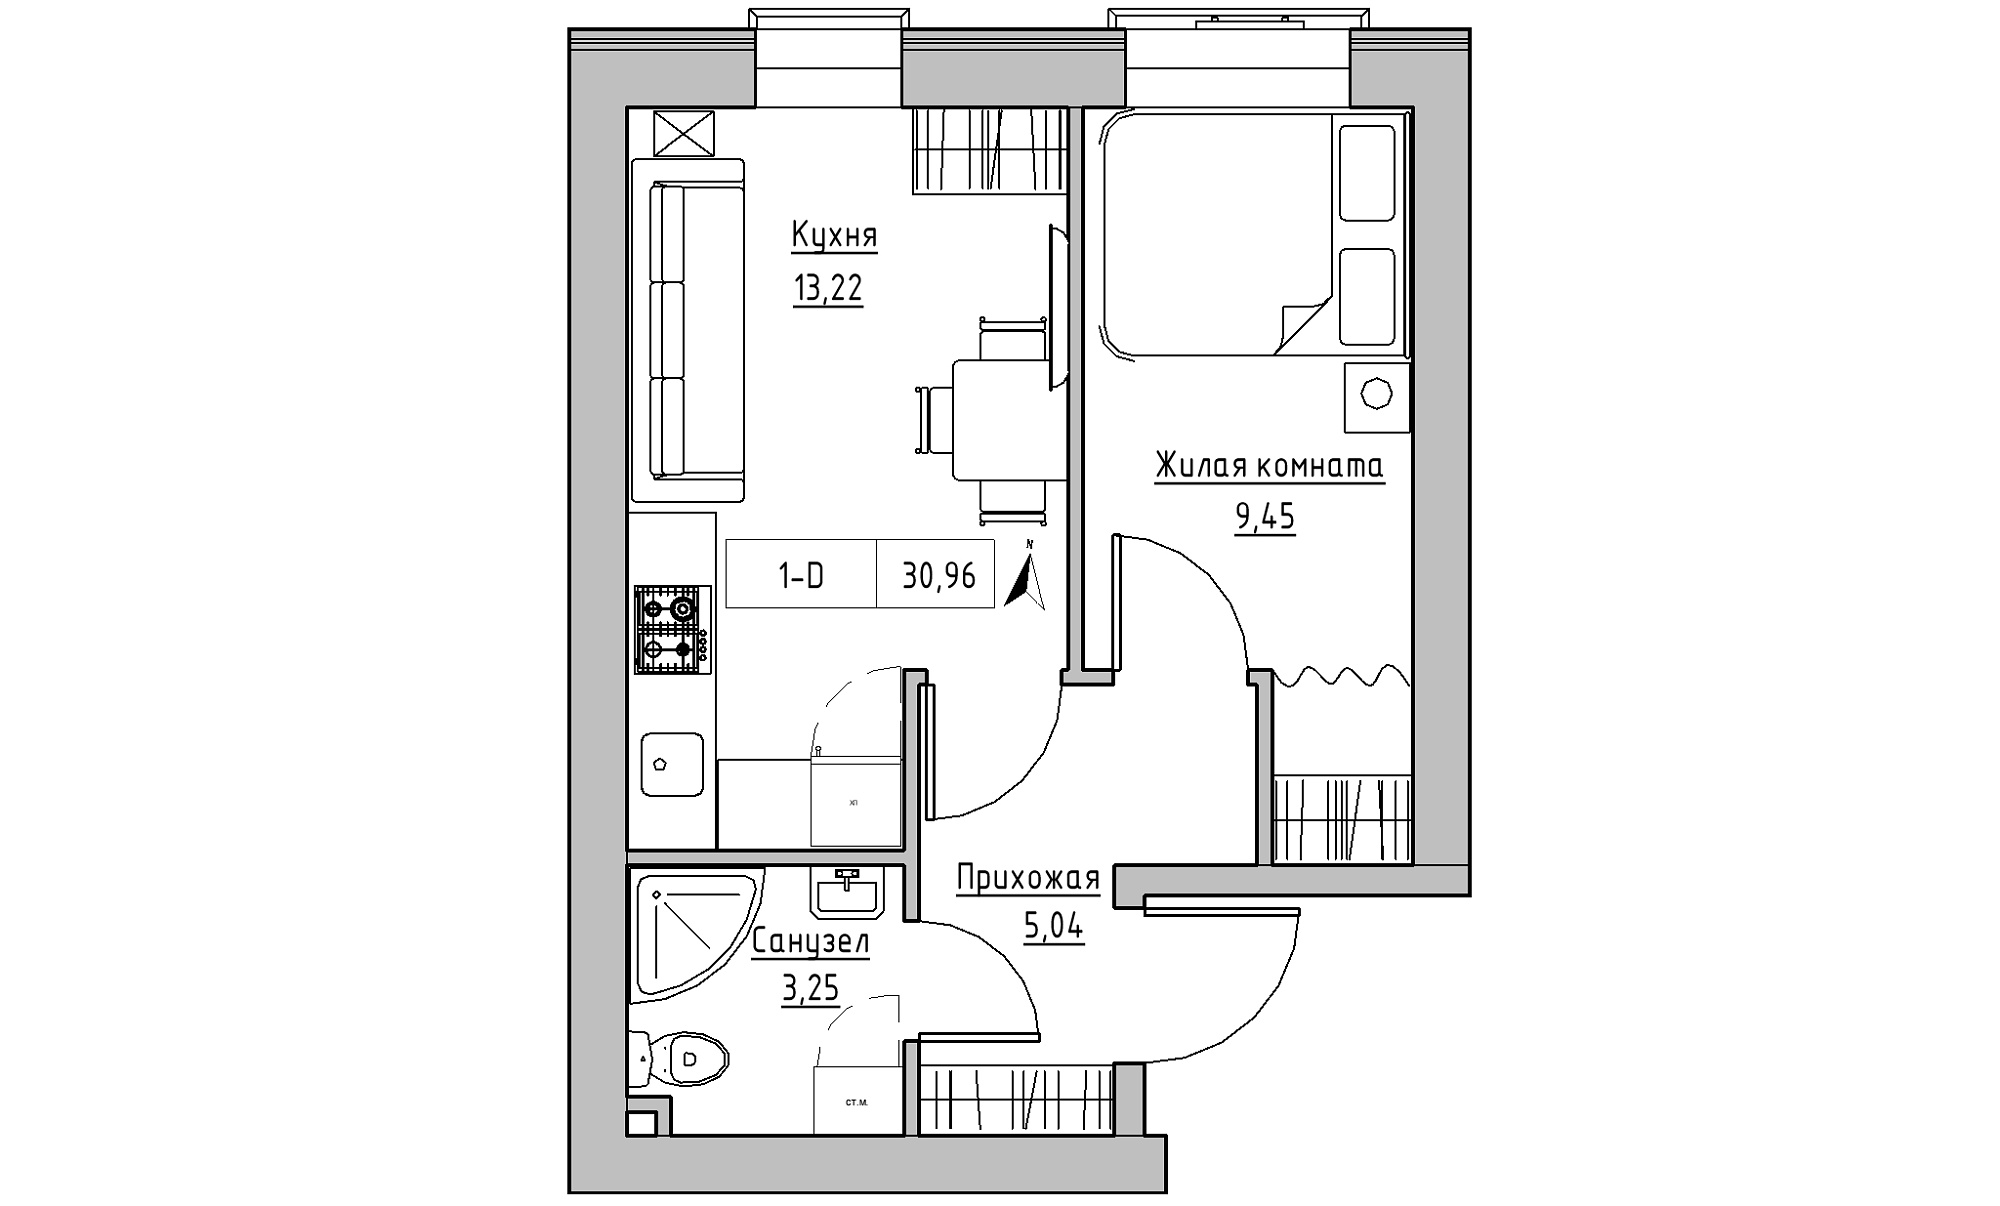 Planning 1-rm flats area 30.96m2, KS-023-01/0015.